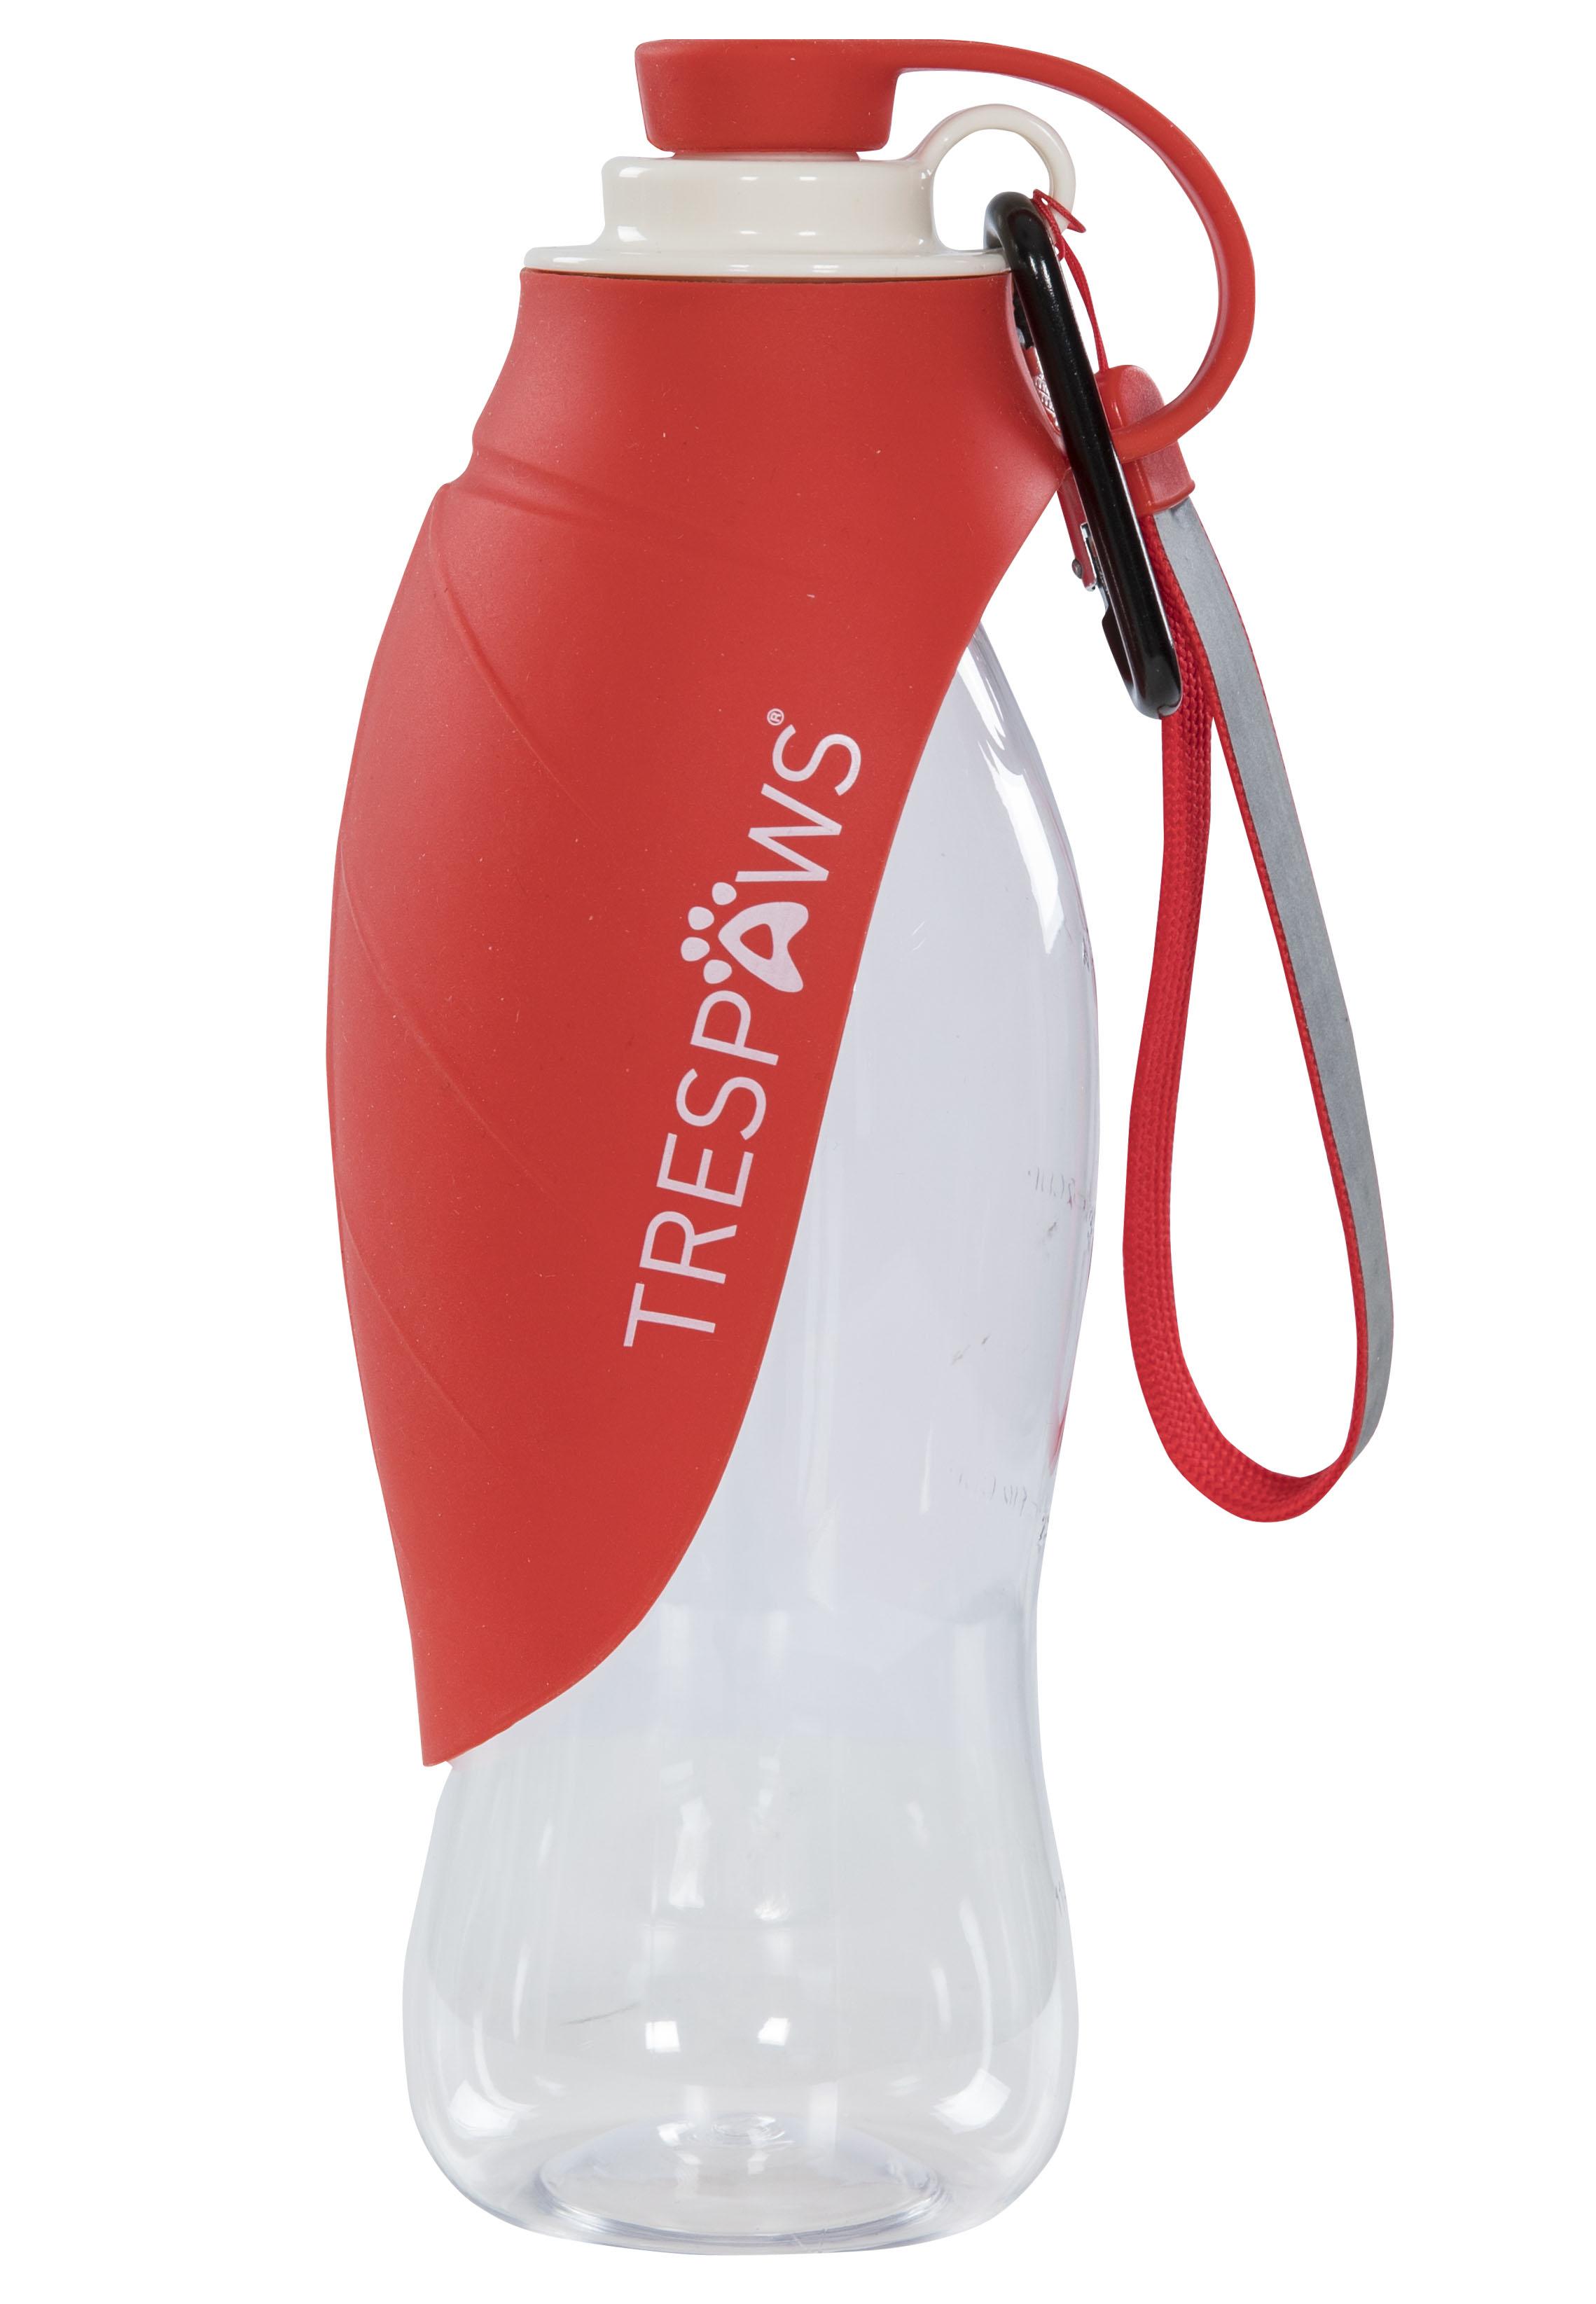 Trespaws Tamu pet water bottle